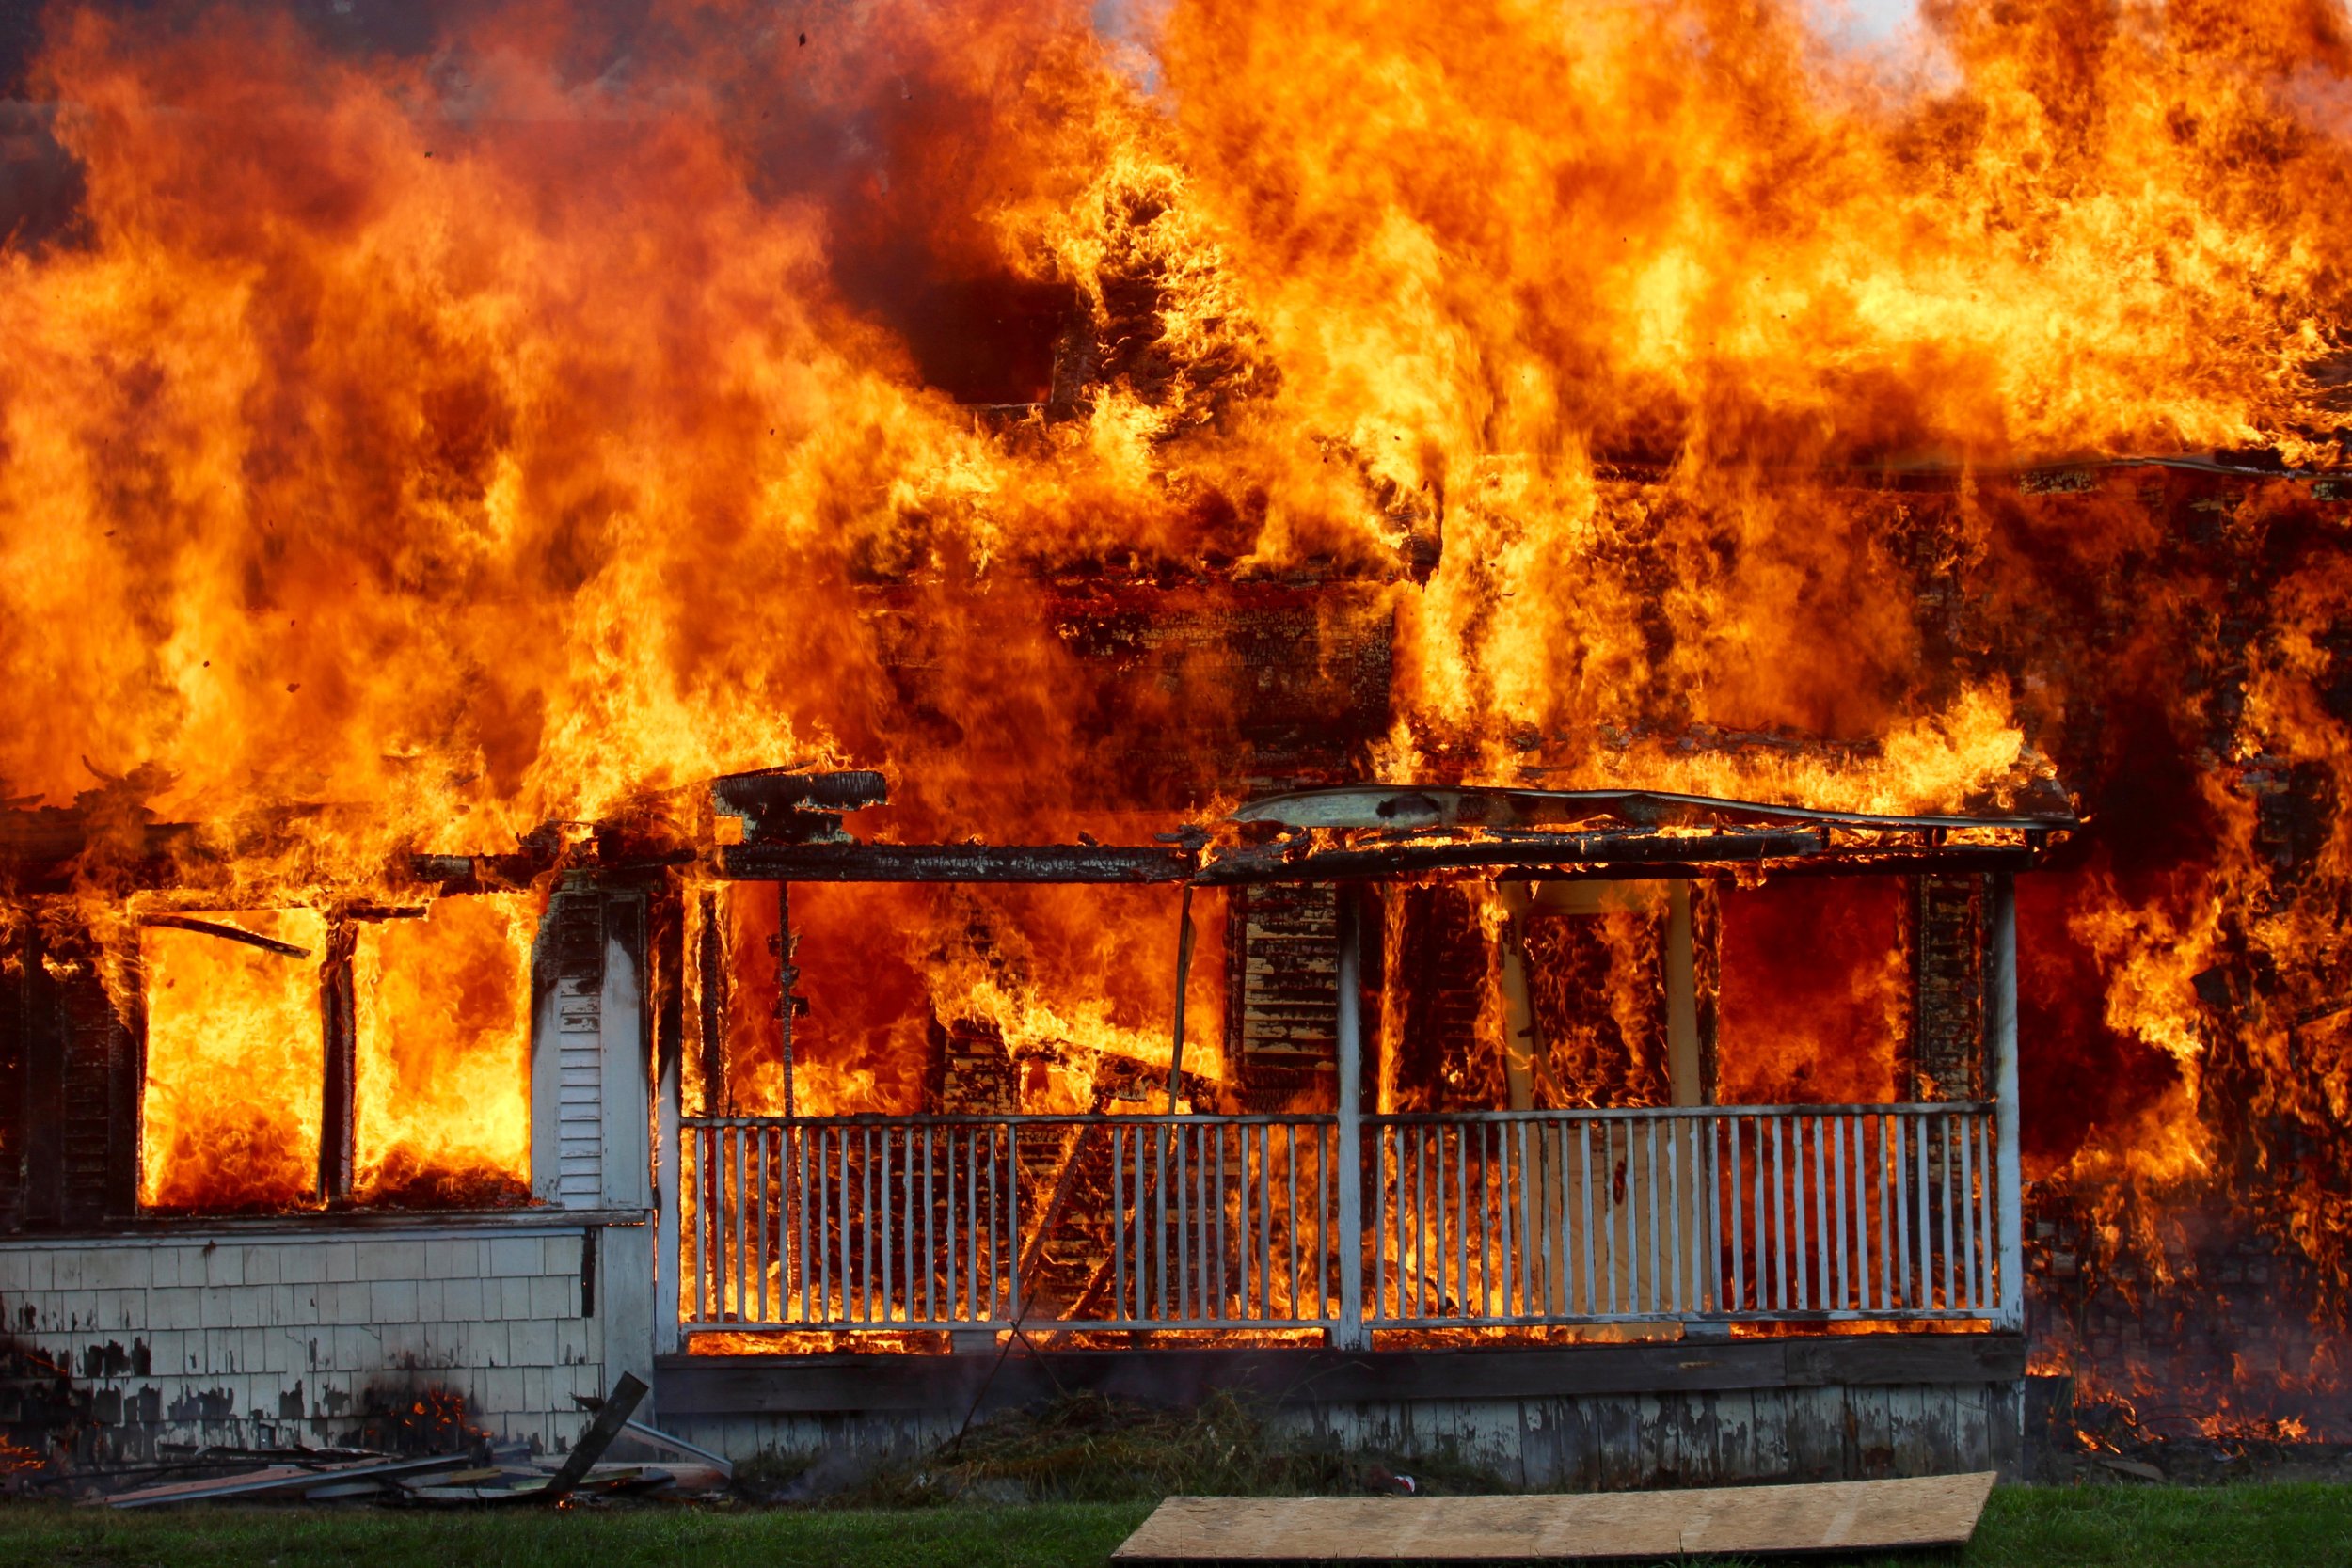   The burning house. Photo by René Morse  